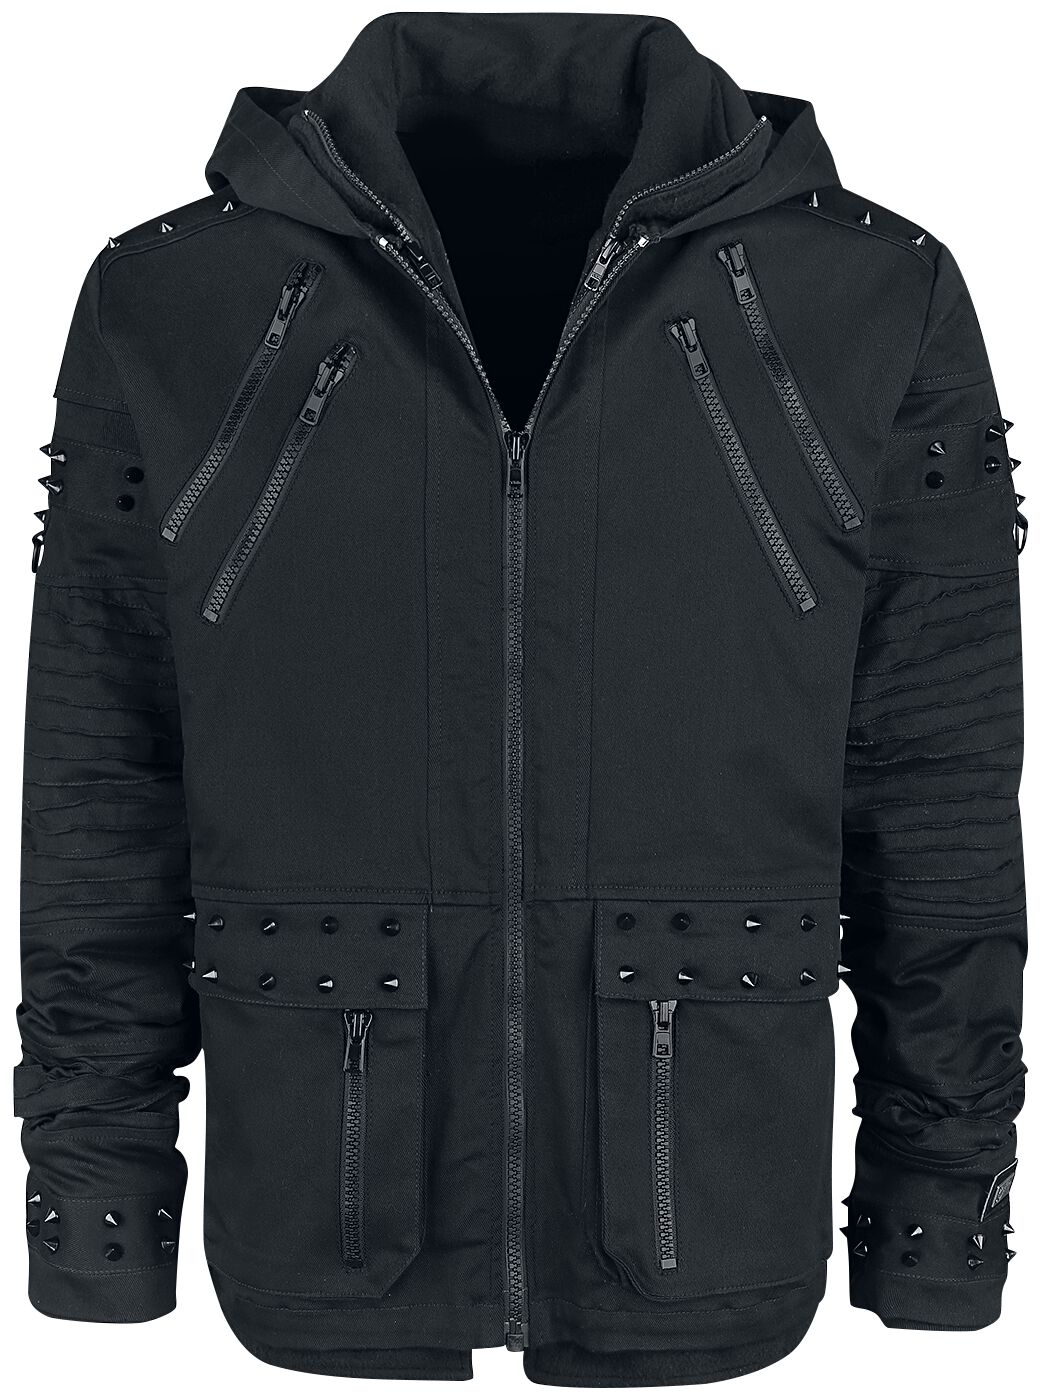 Vixxsin Black Chrome Jacket Winterjacke schwarz in M